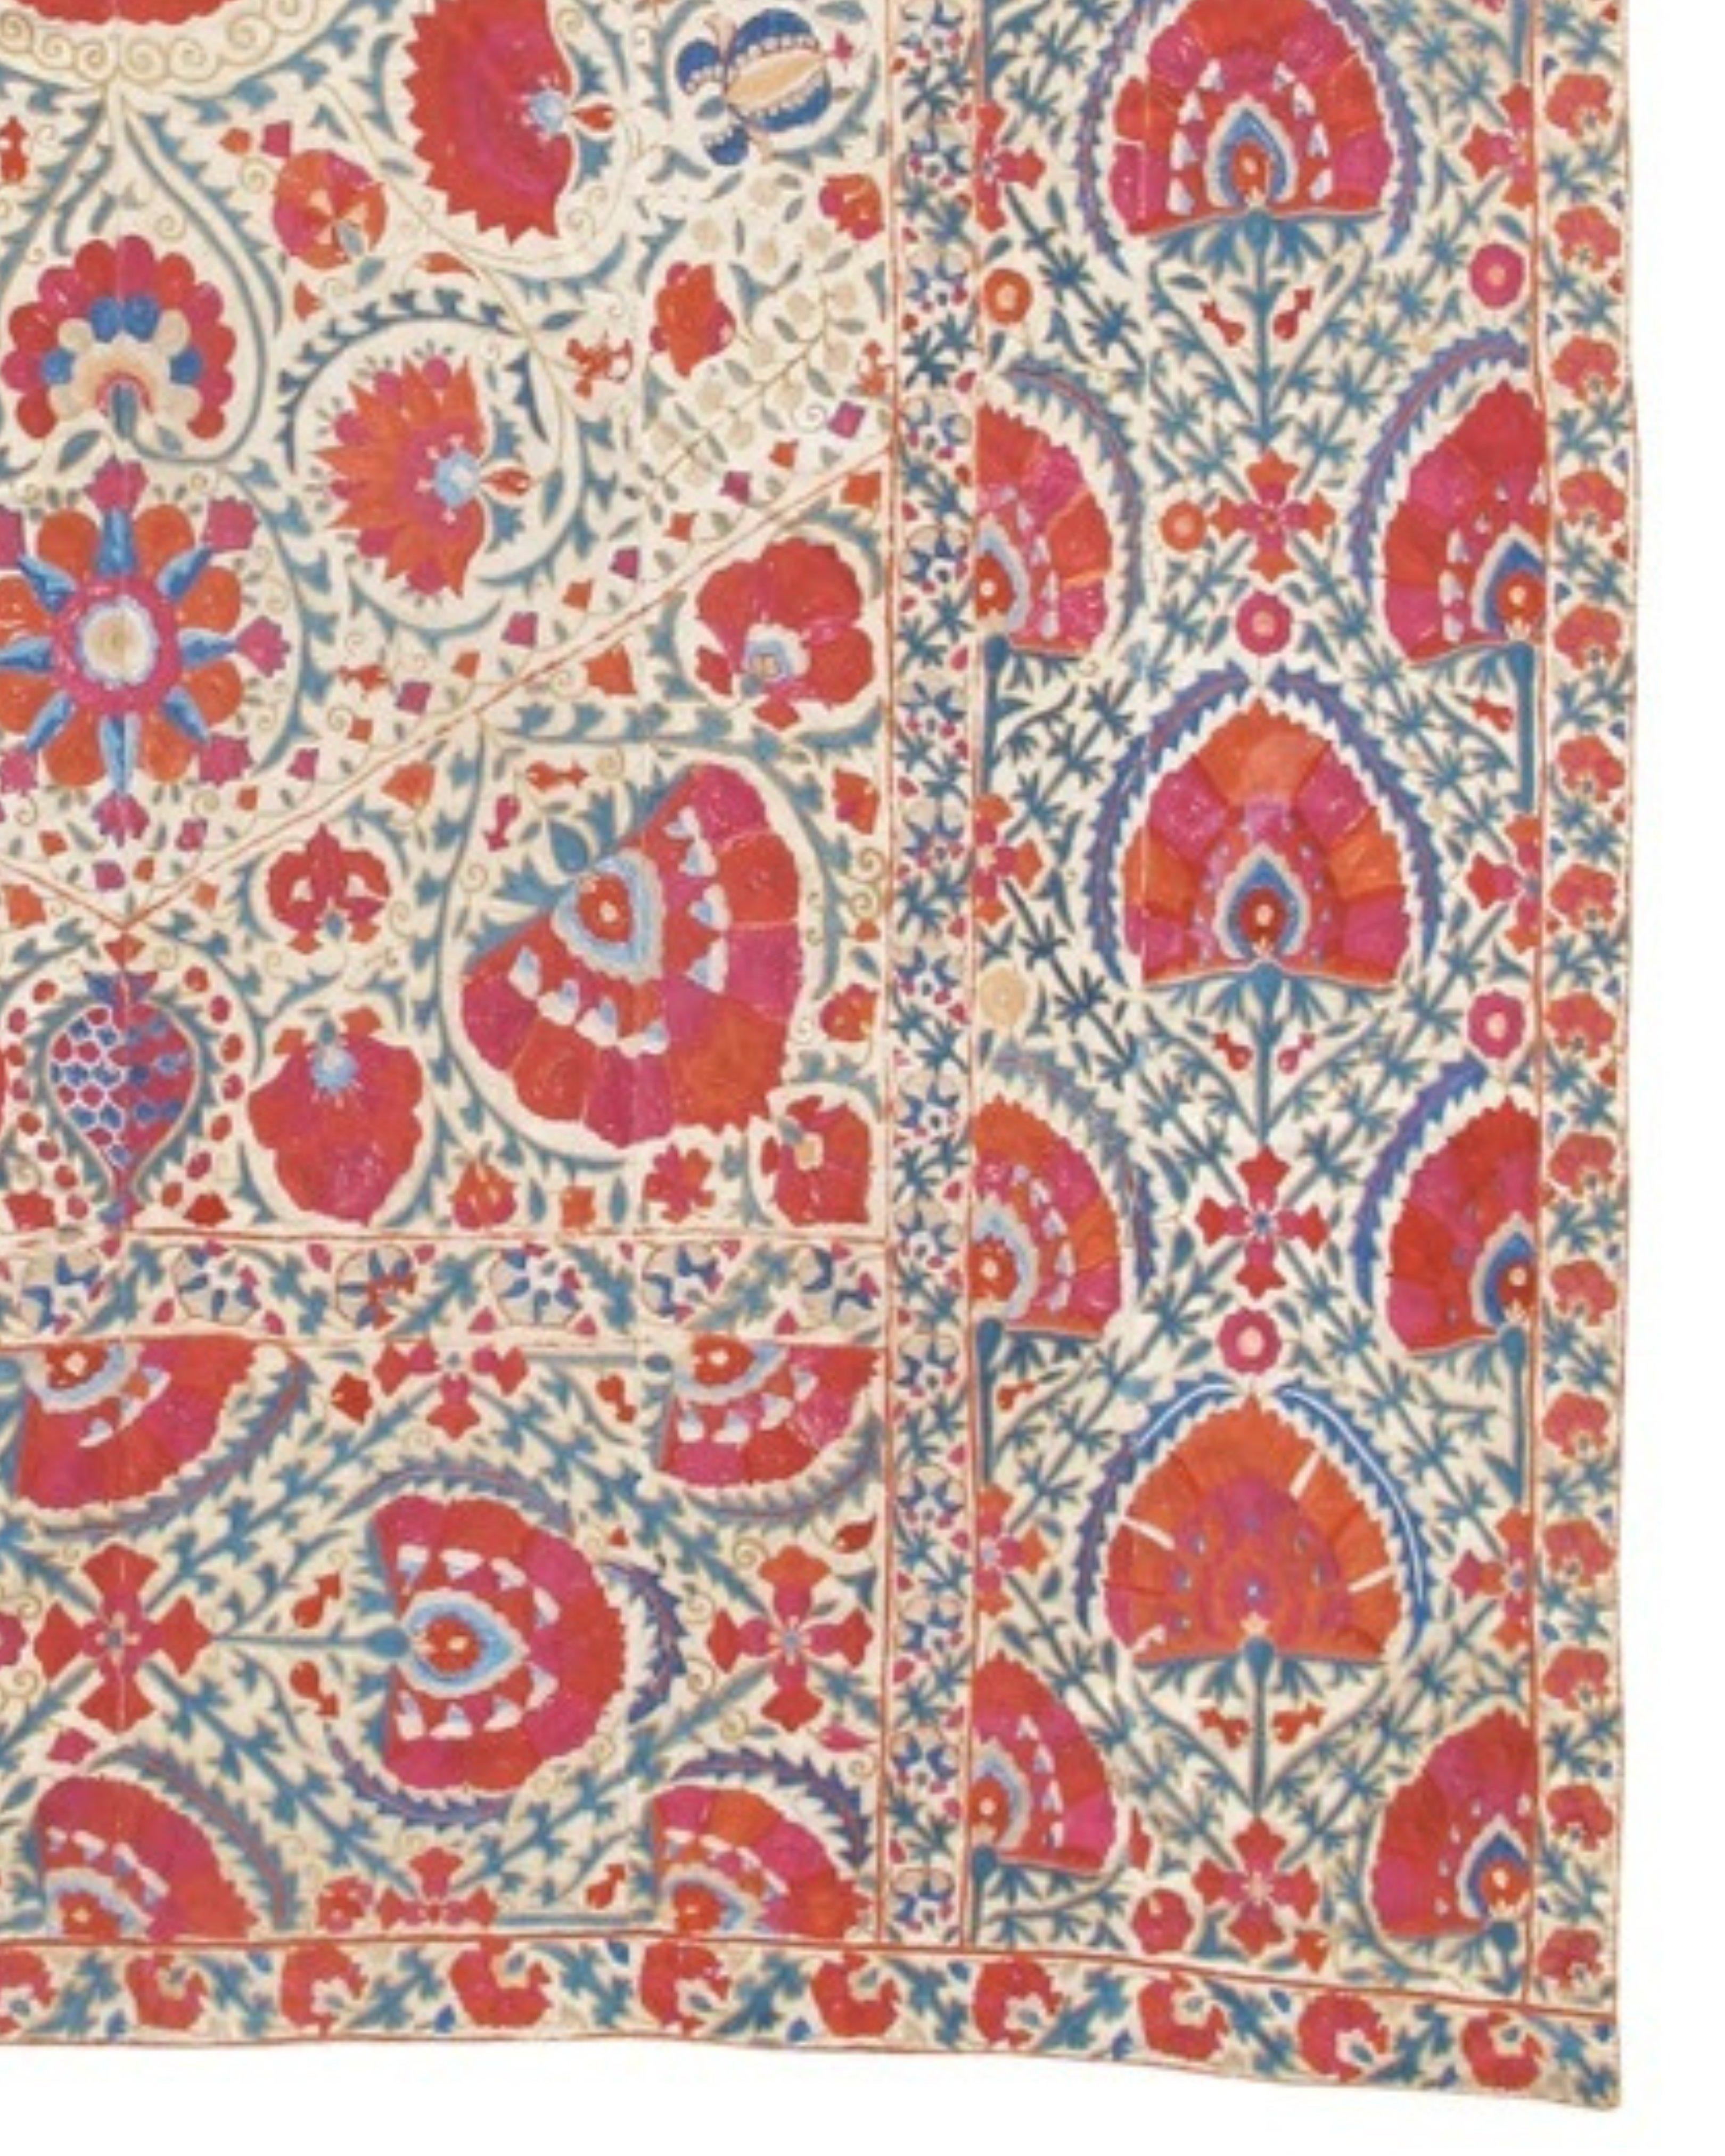 Antique Uzbek Kermina Suzani Textile, c. 1800 In Good Condition For Sale In San Francisco, CA